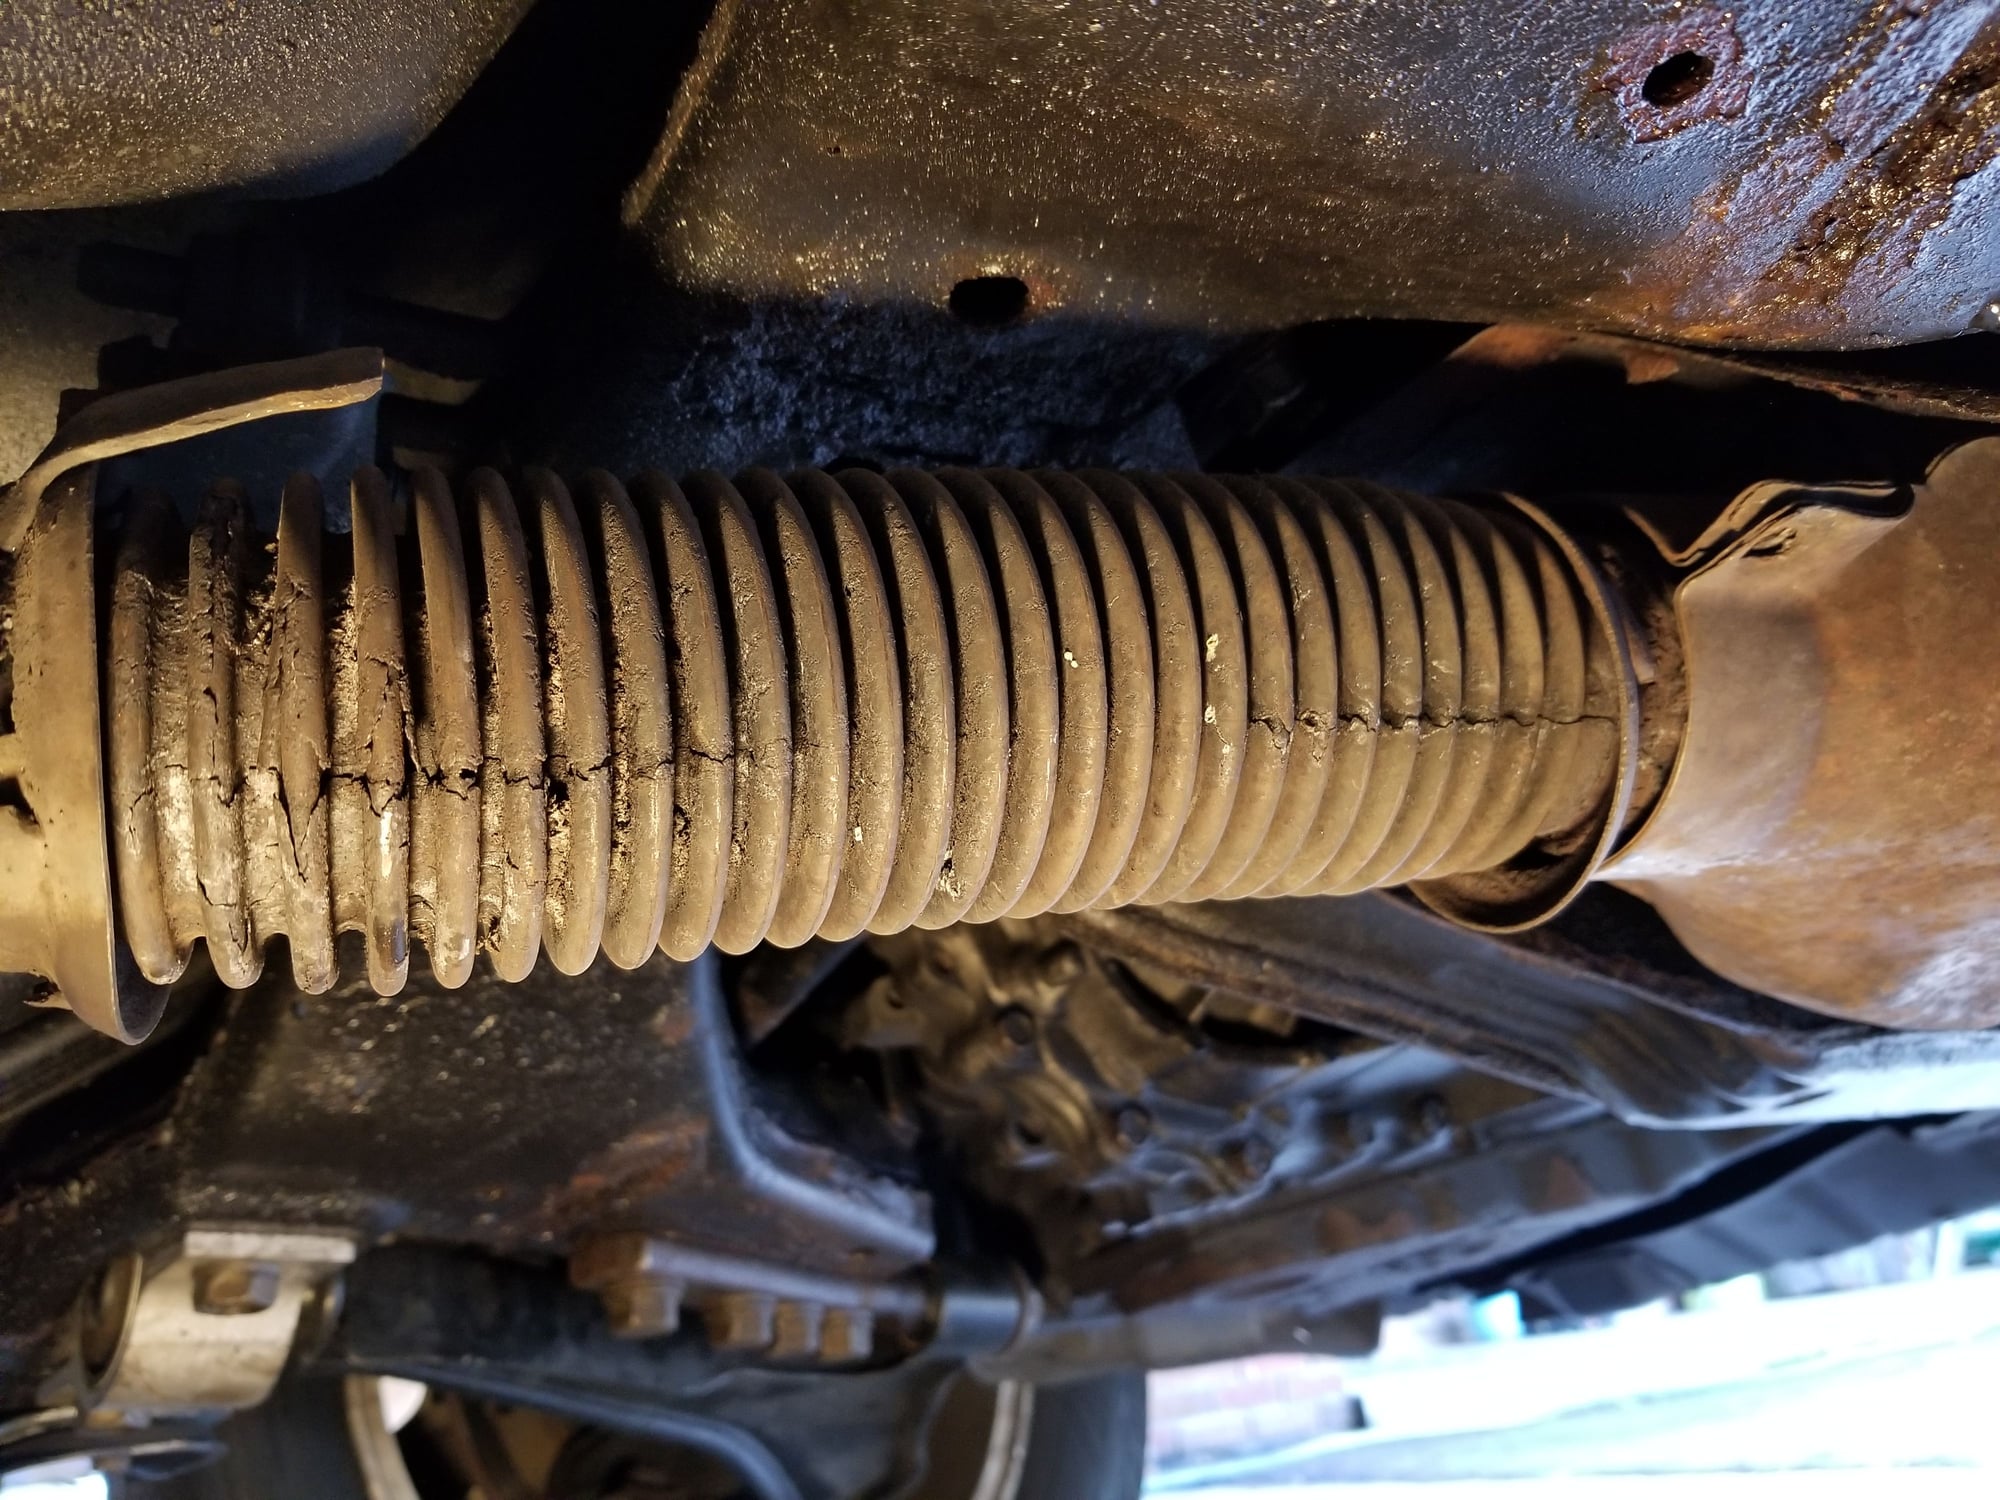 Leaking Flex Pipe: Fix needed? - Maintenance/Repairs - Car Talk Community